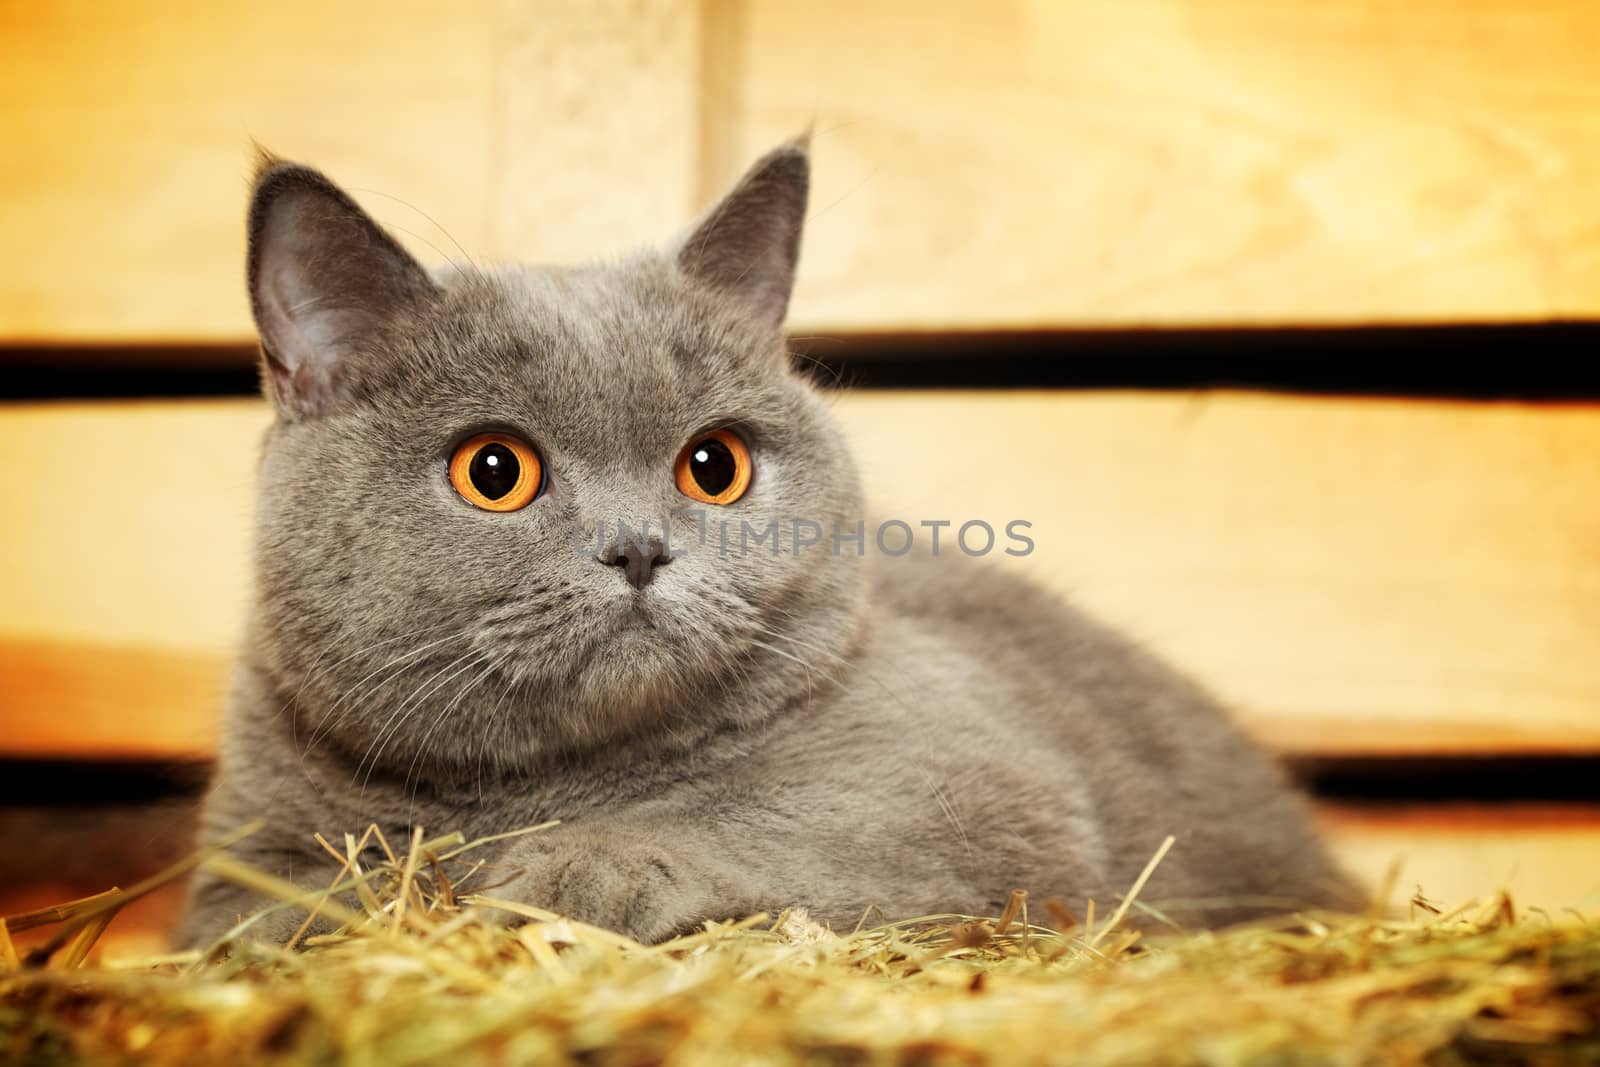 funny blue british shorthair cat on hayloft